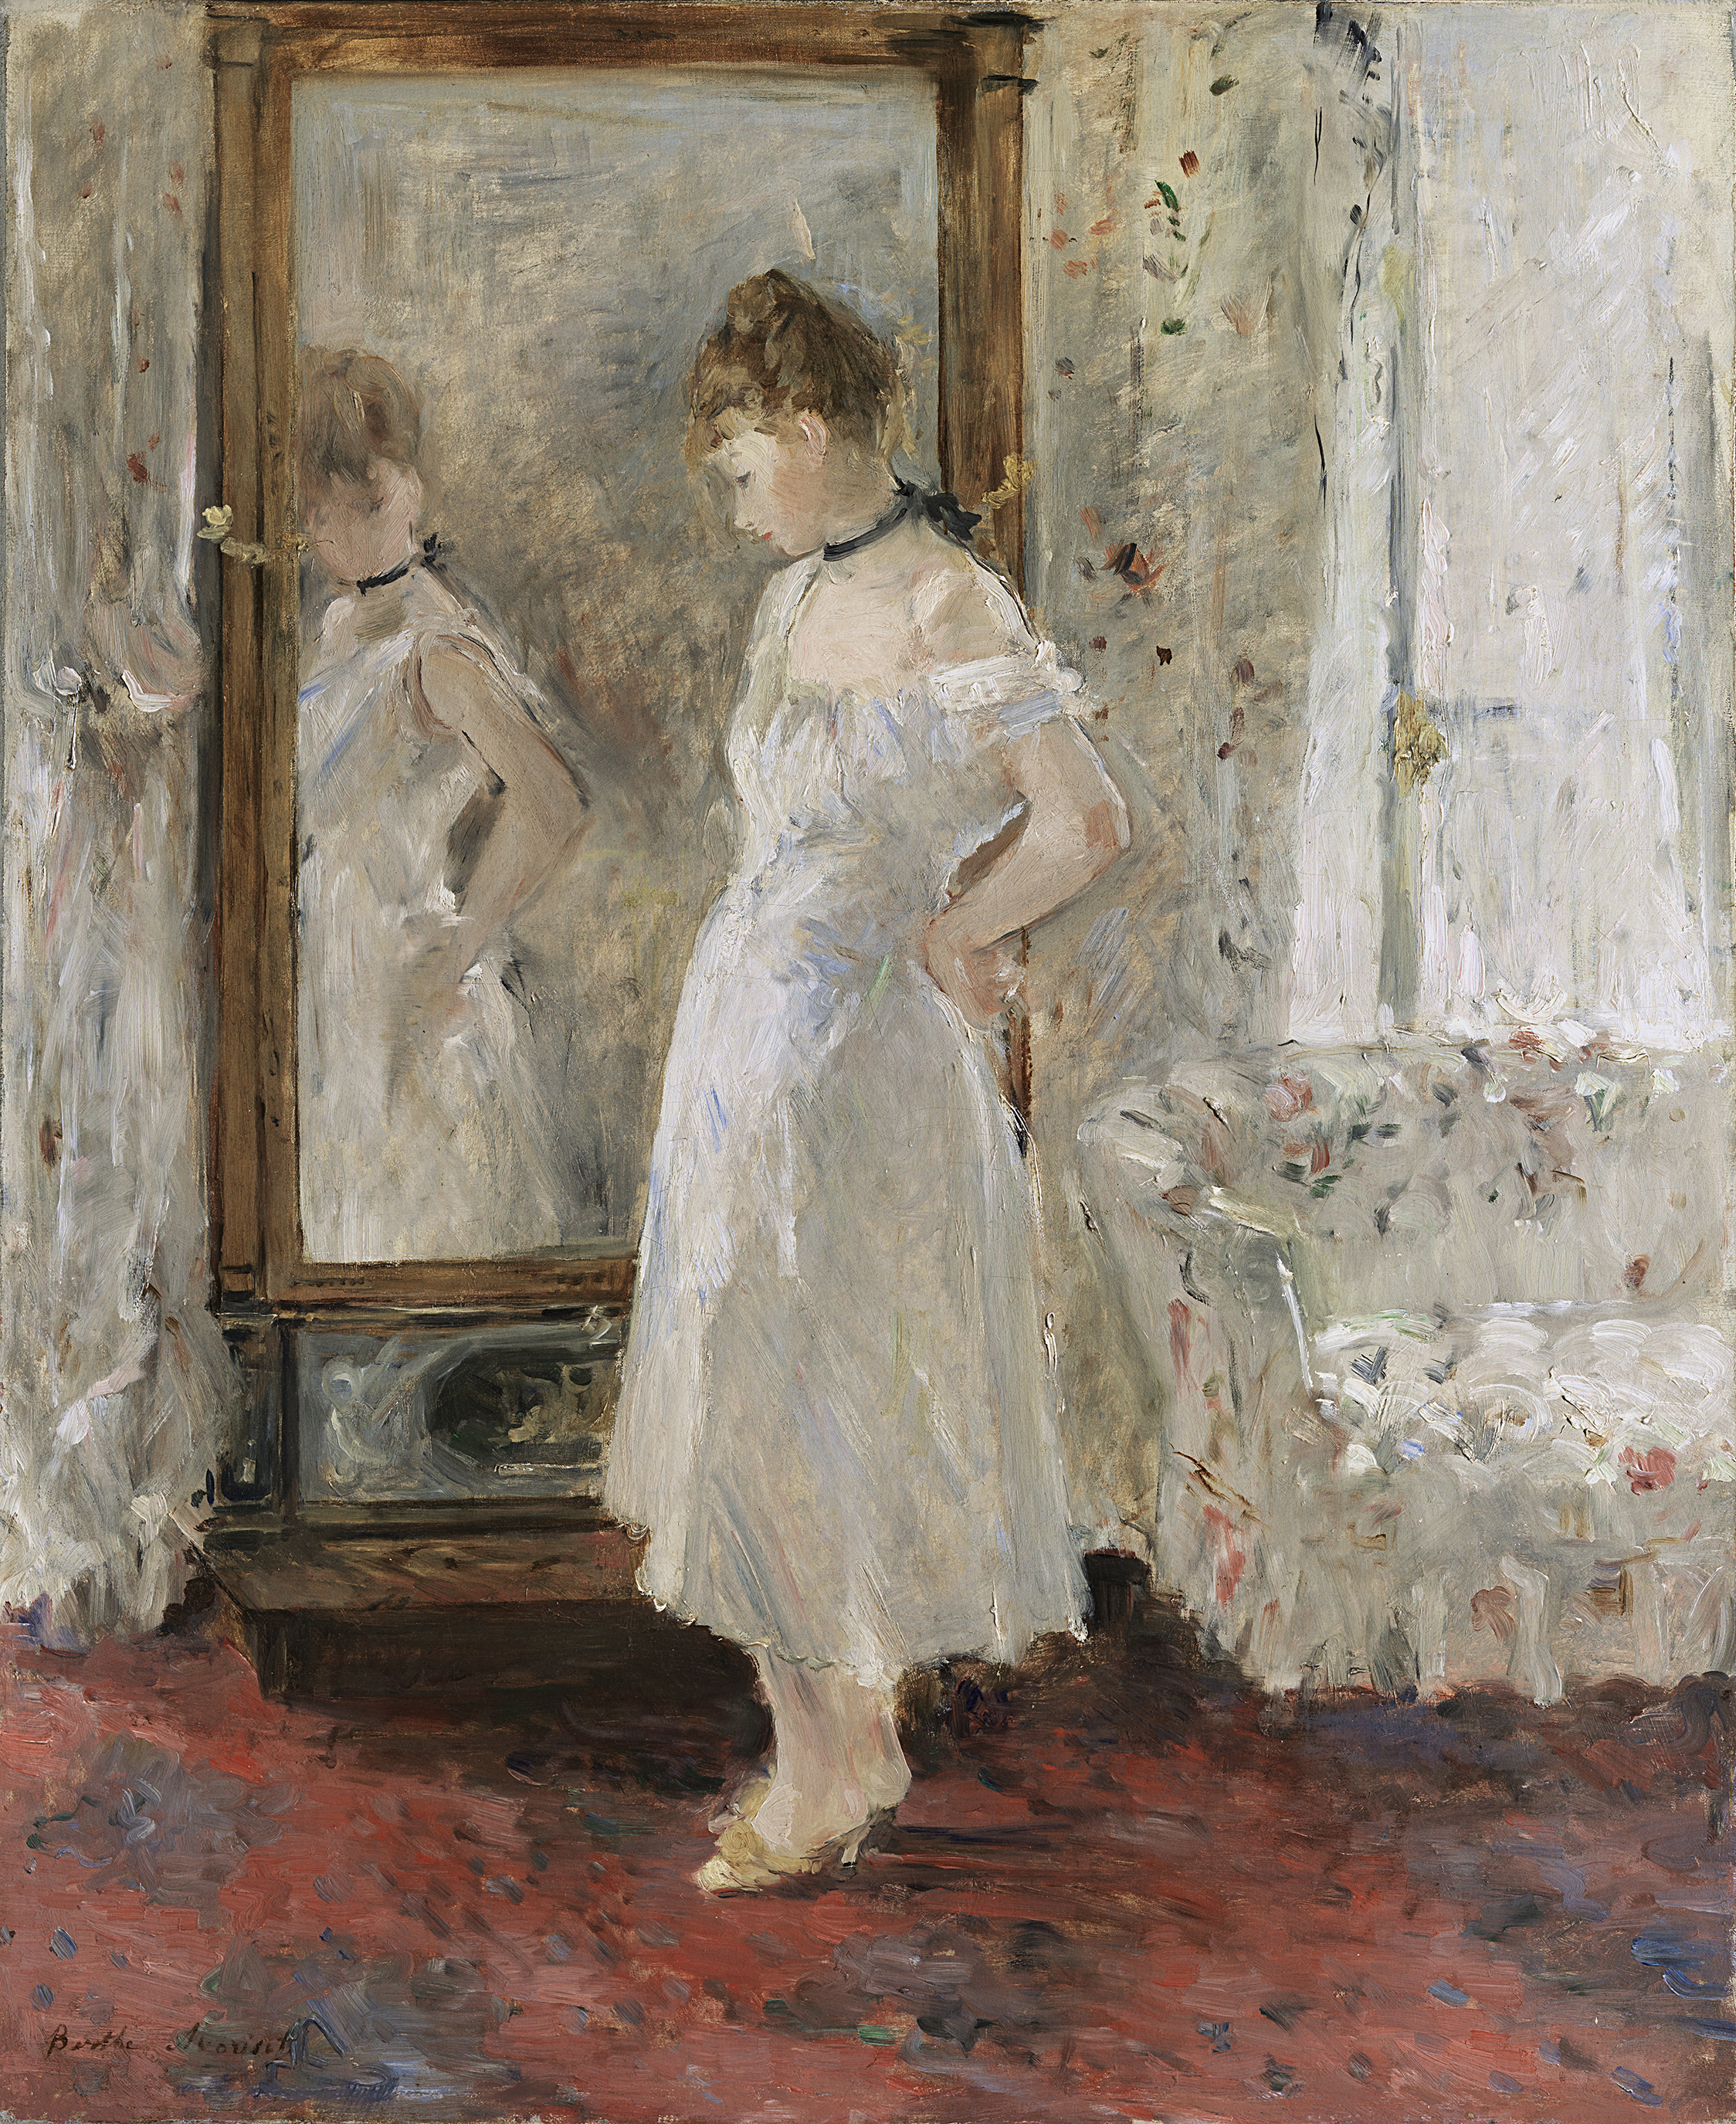 Zrcadlo psyche by Berthe Morisot - 1876 - 65 x 54 cm 